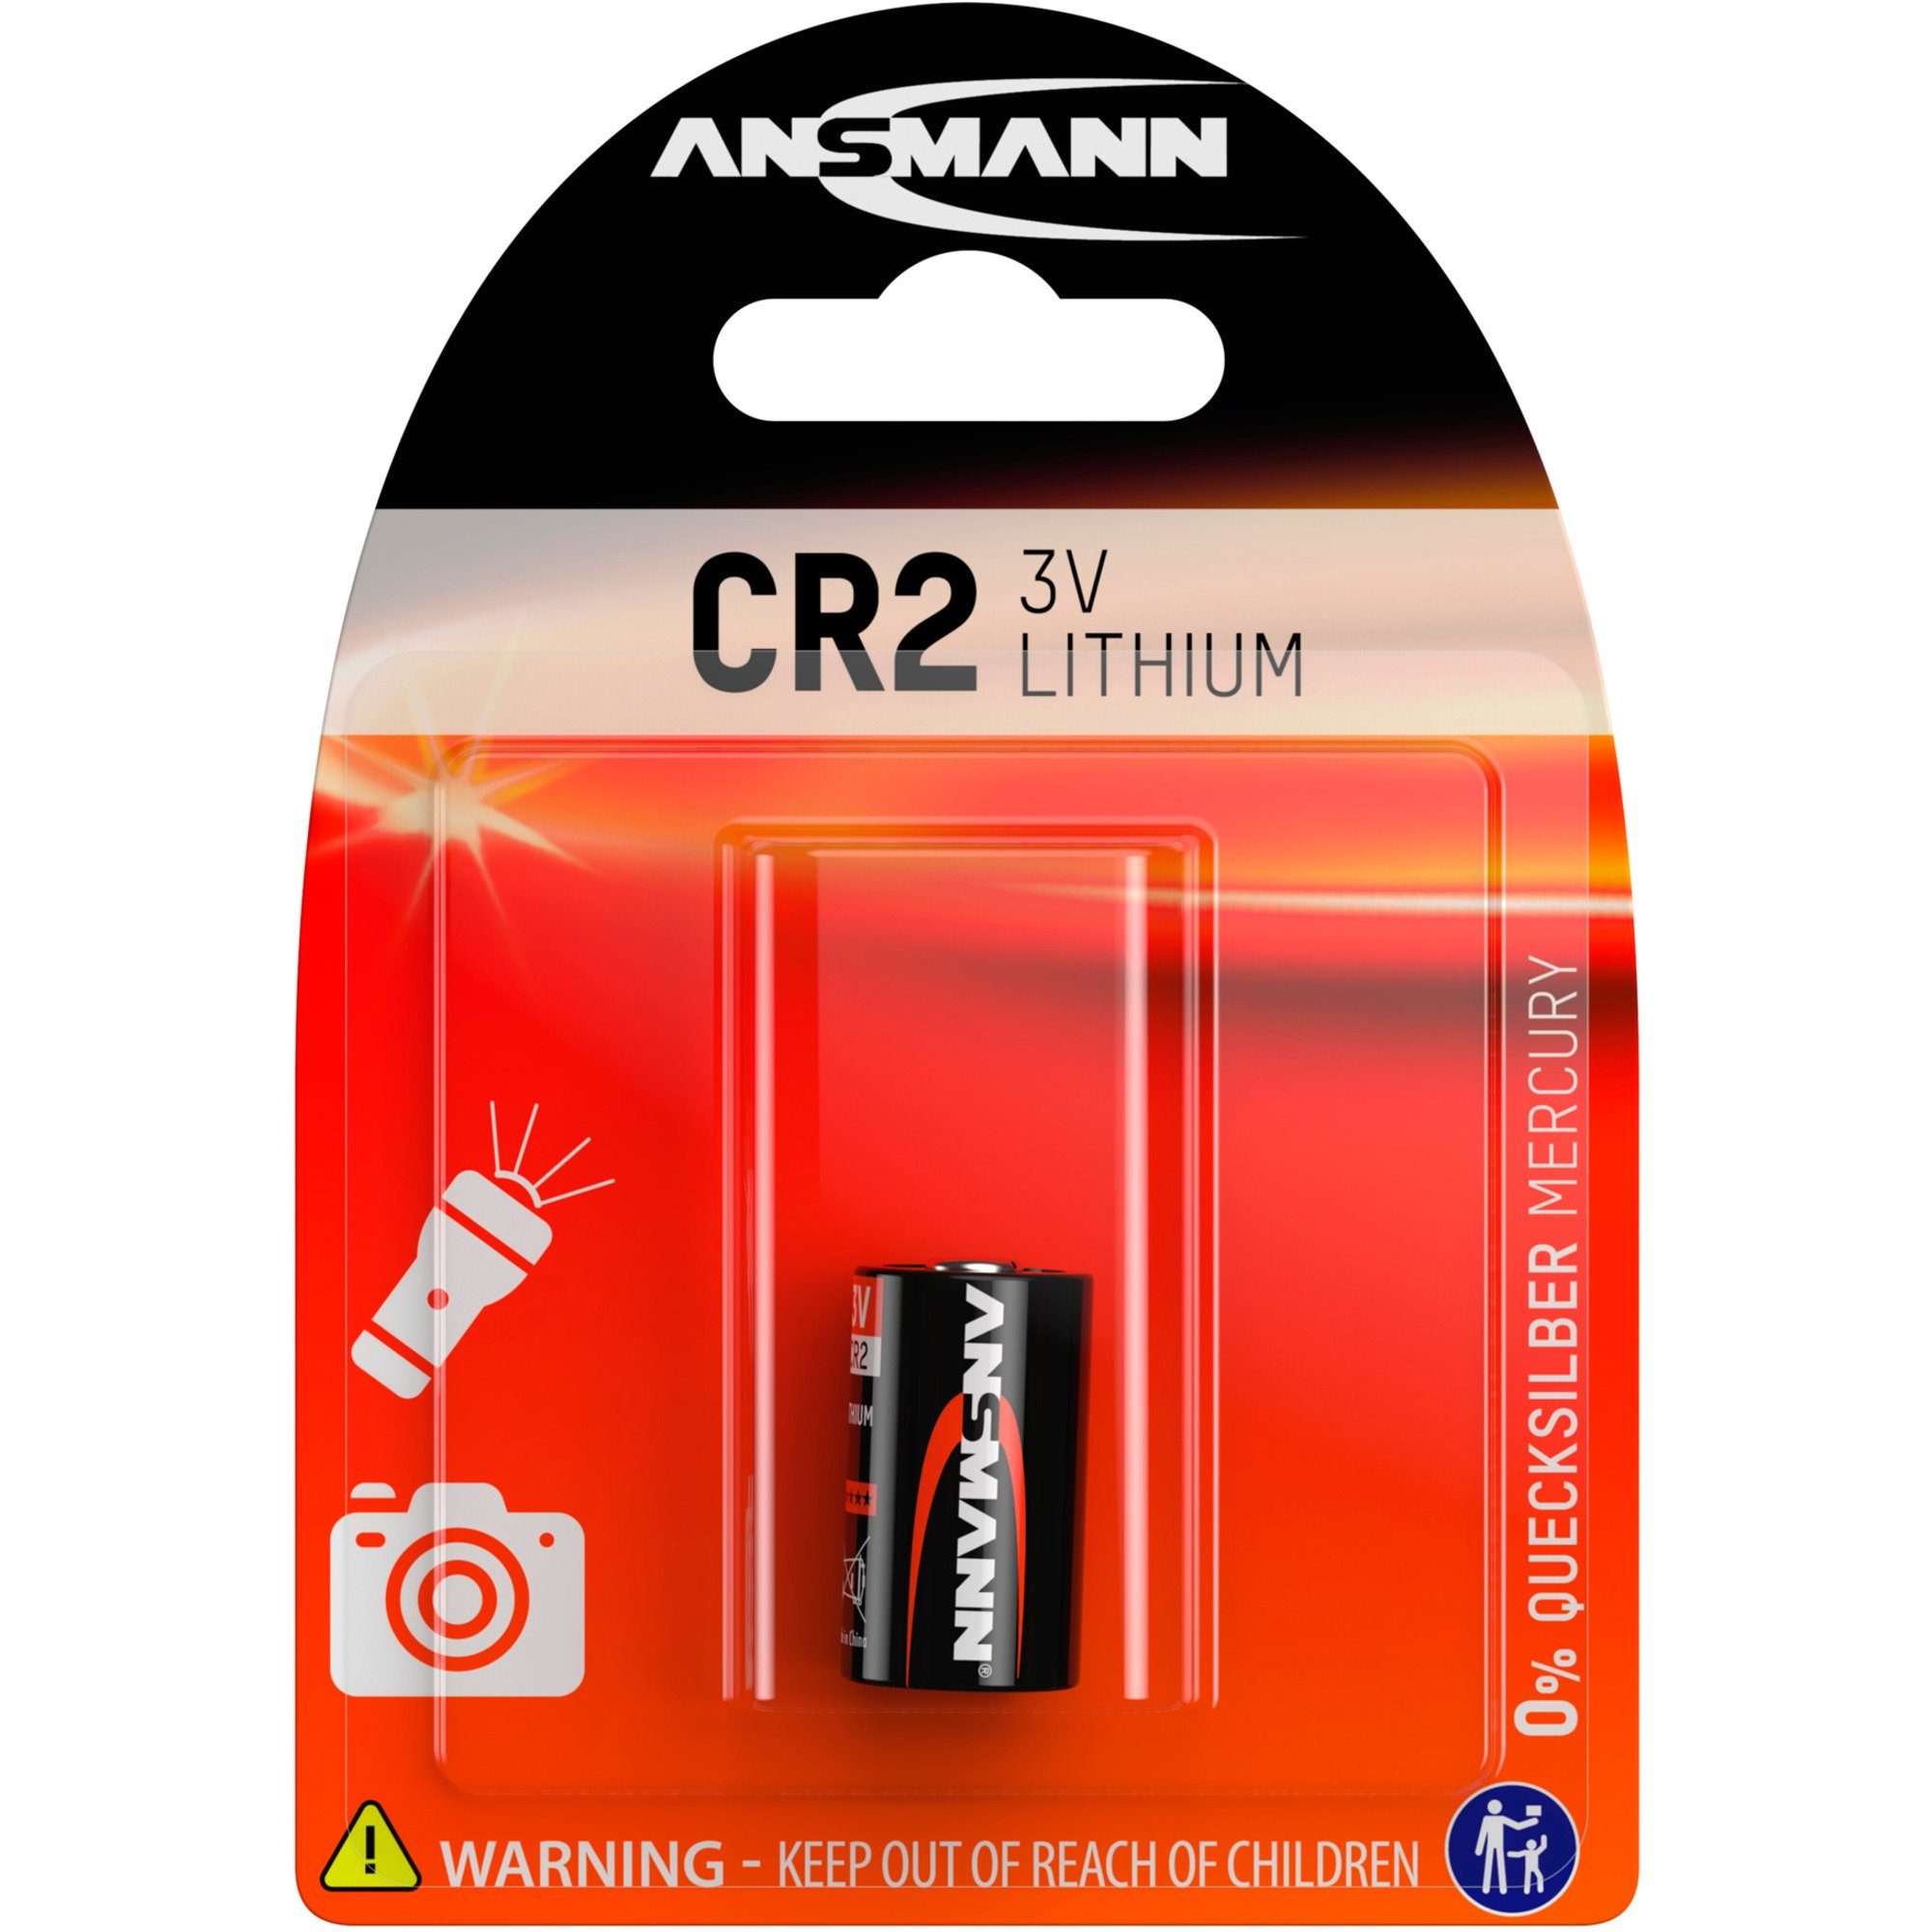 ANSMANN® Ansmann Lithium Batterie CR2/CR17335, (1 Stück) Kamera-Akku